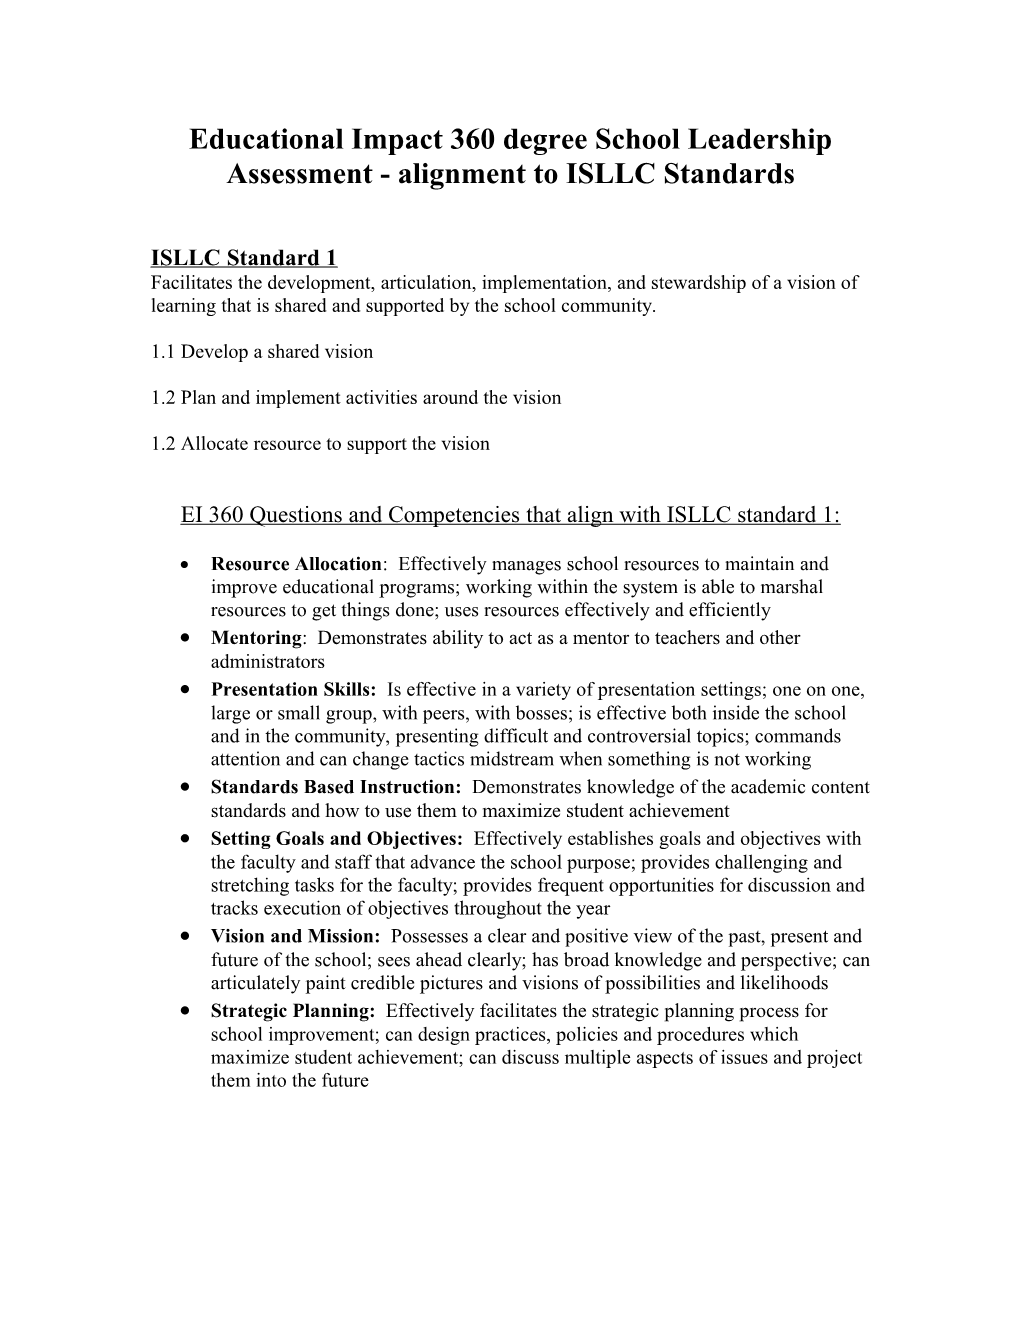 Educational Impact 360 Degree School Leadership Assessment - Alignment to ISLLC Standards